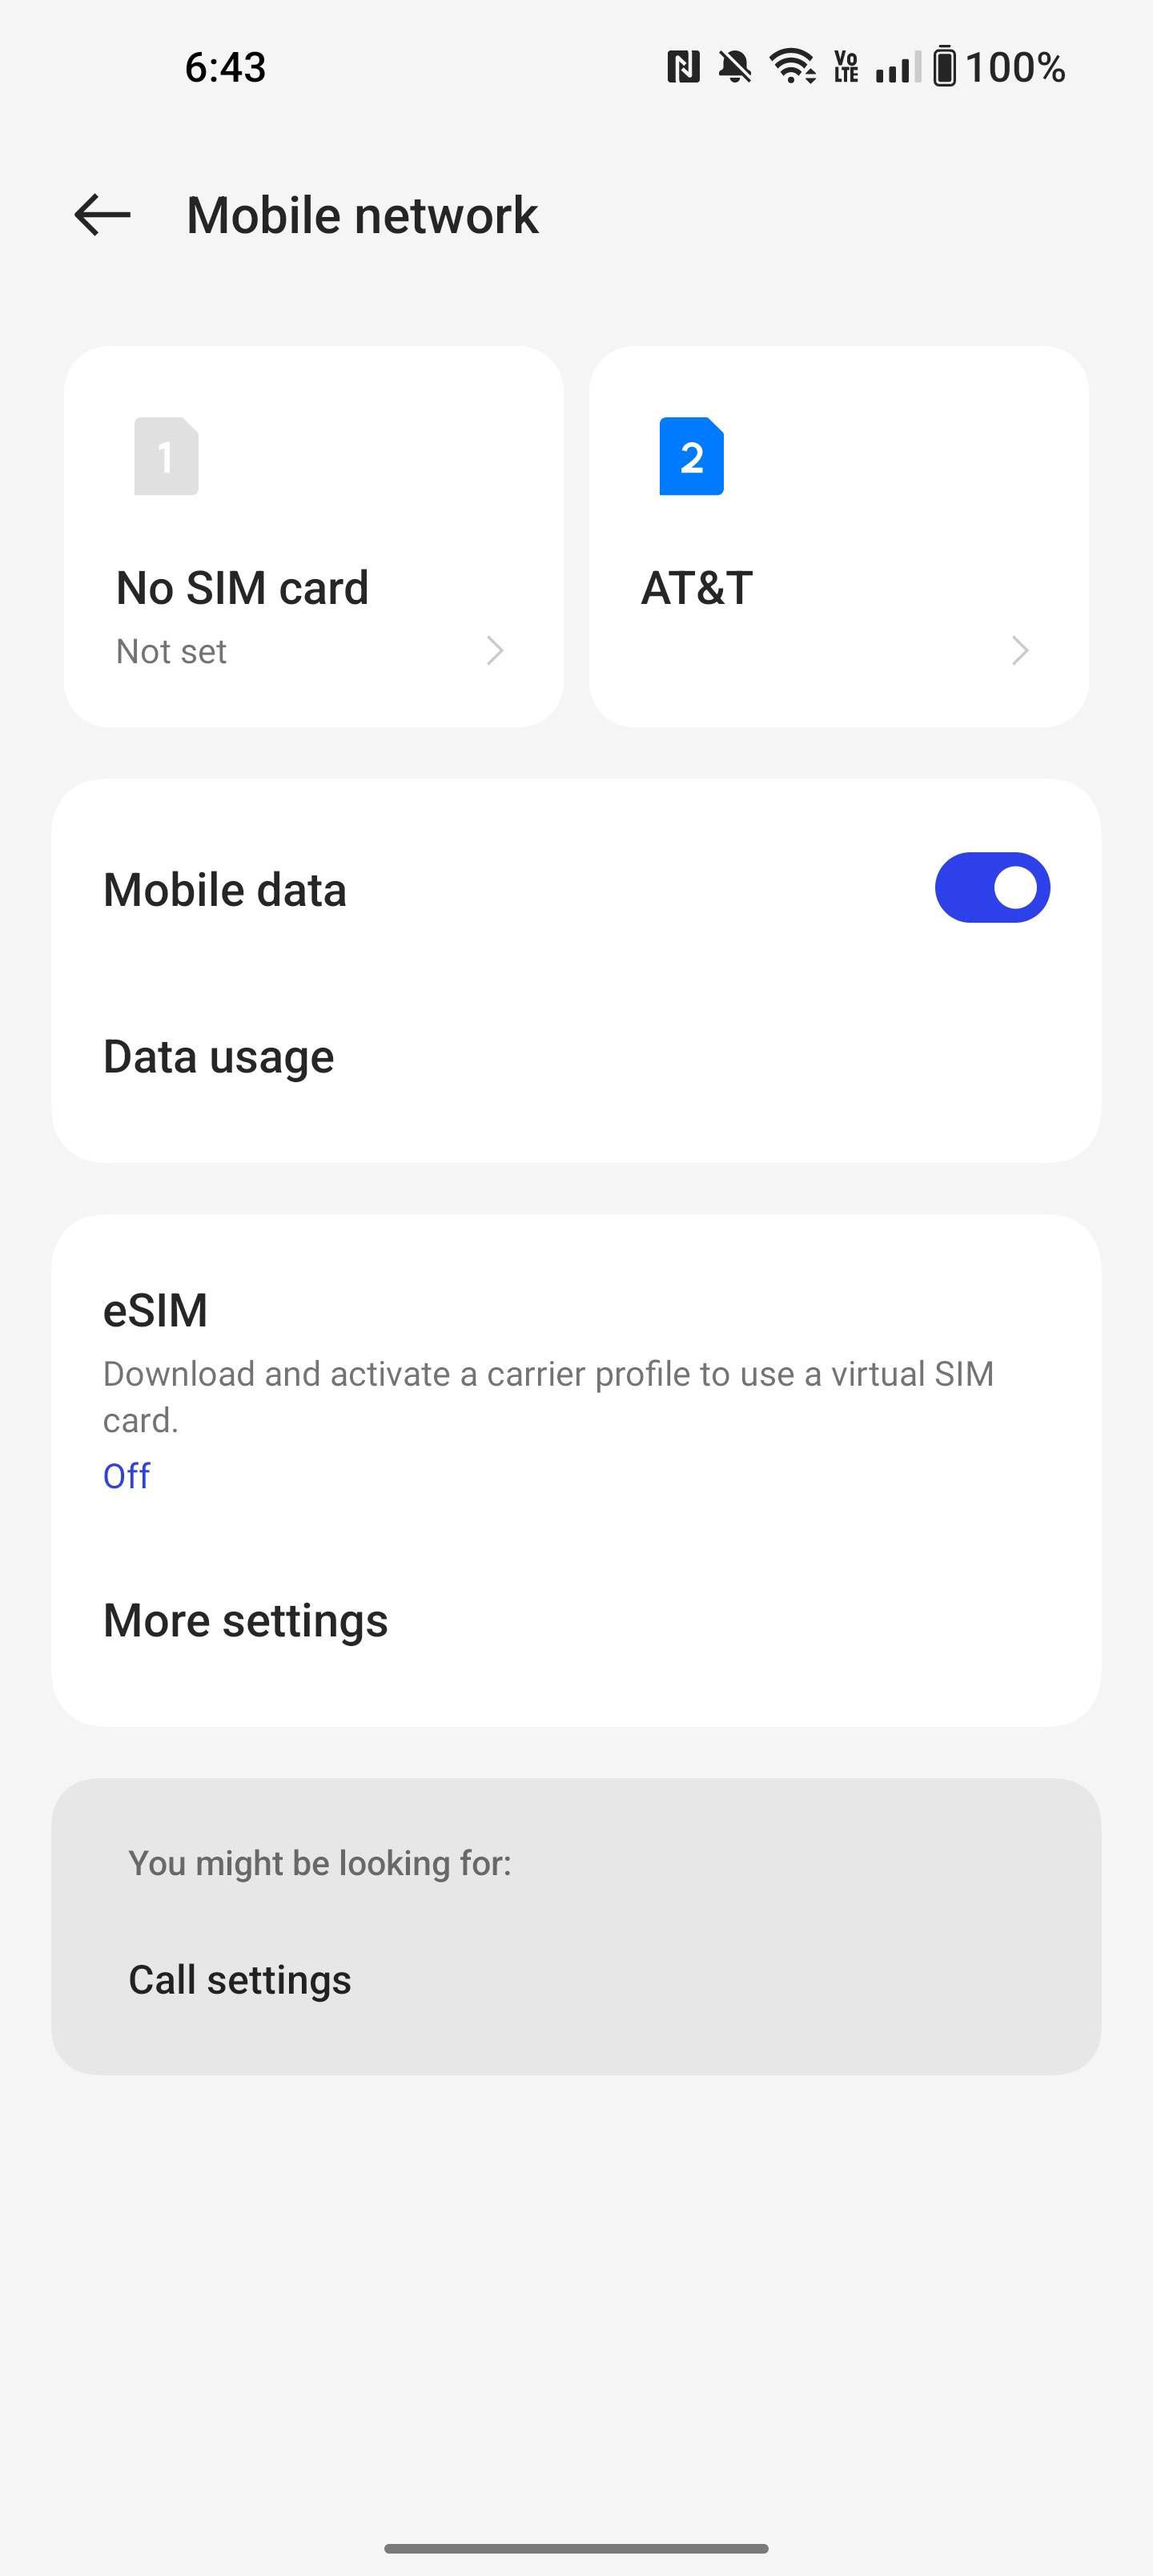 OnePlus mobile network settings menu.